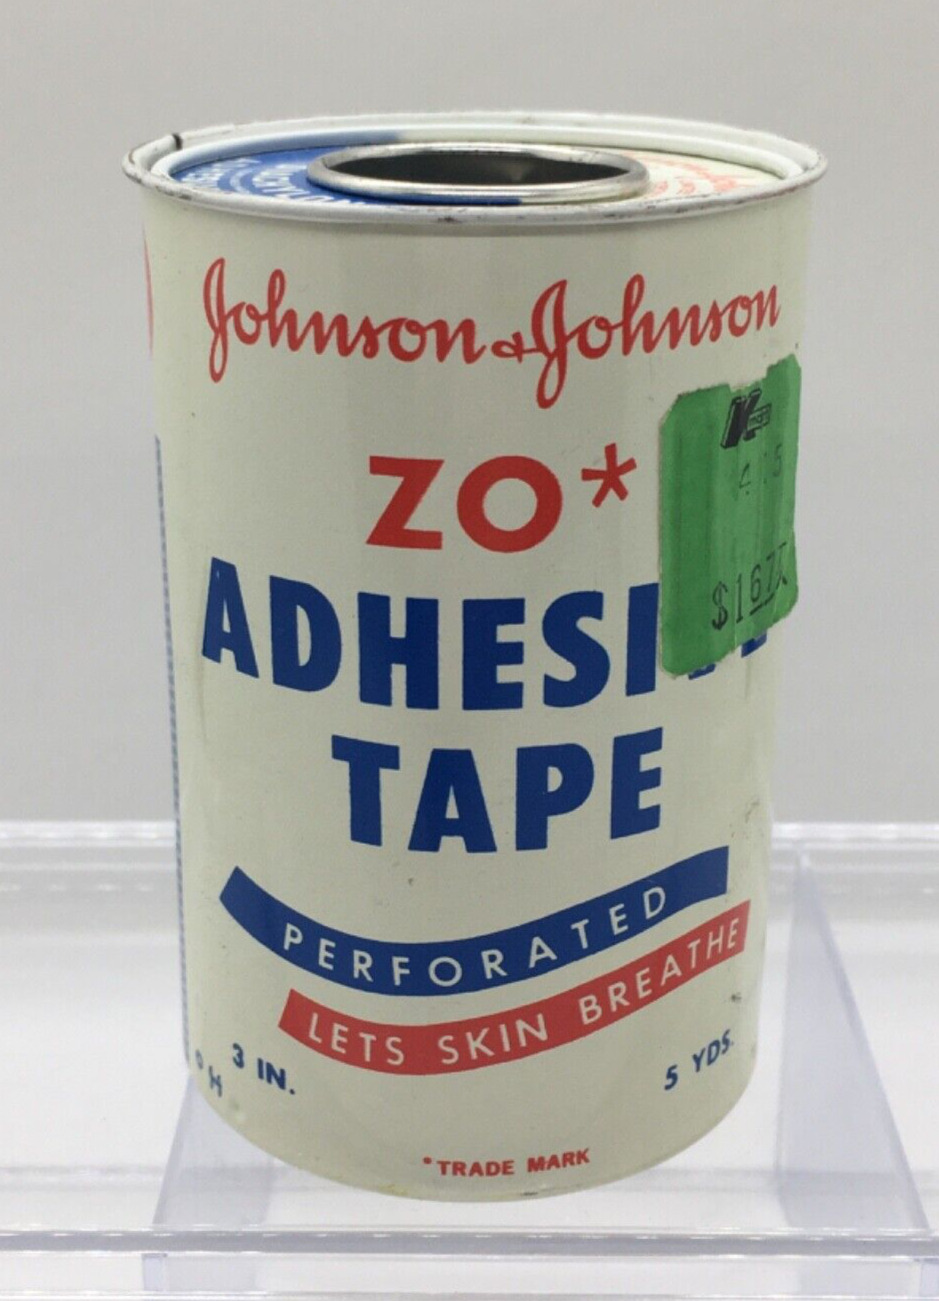 Vtg 1964 Johnson and Johnson ZO* Adhesive Tape Waterproof 3 Inch Perforated